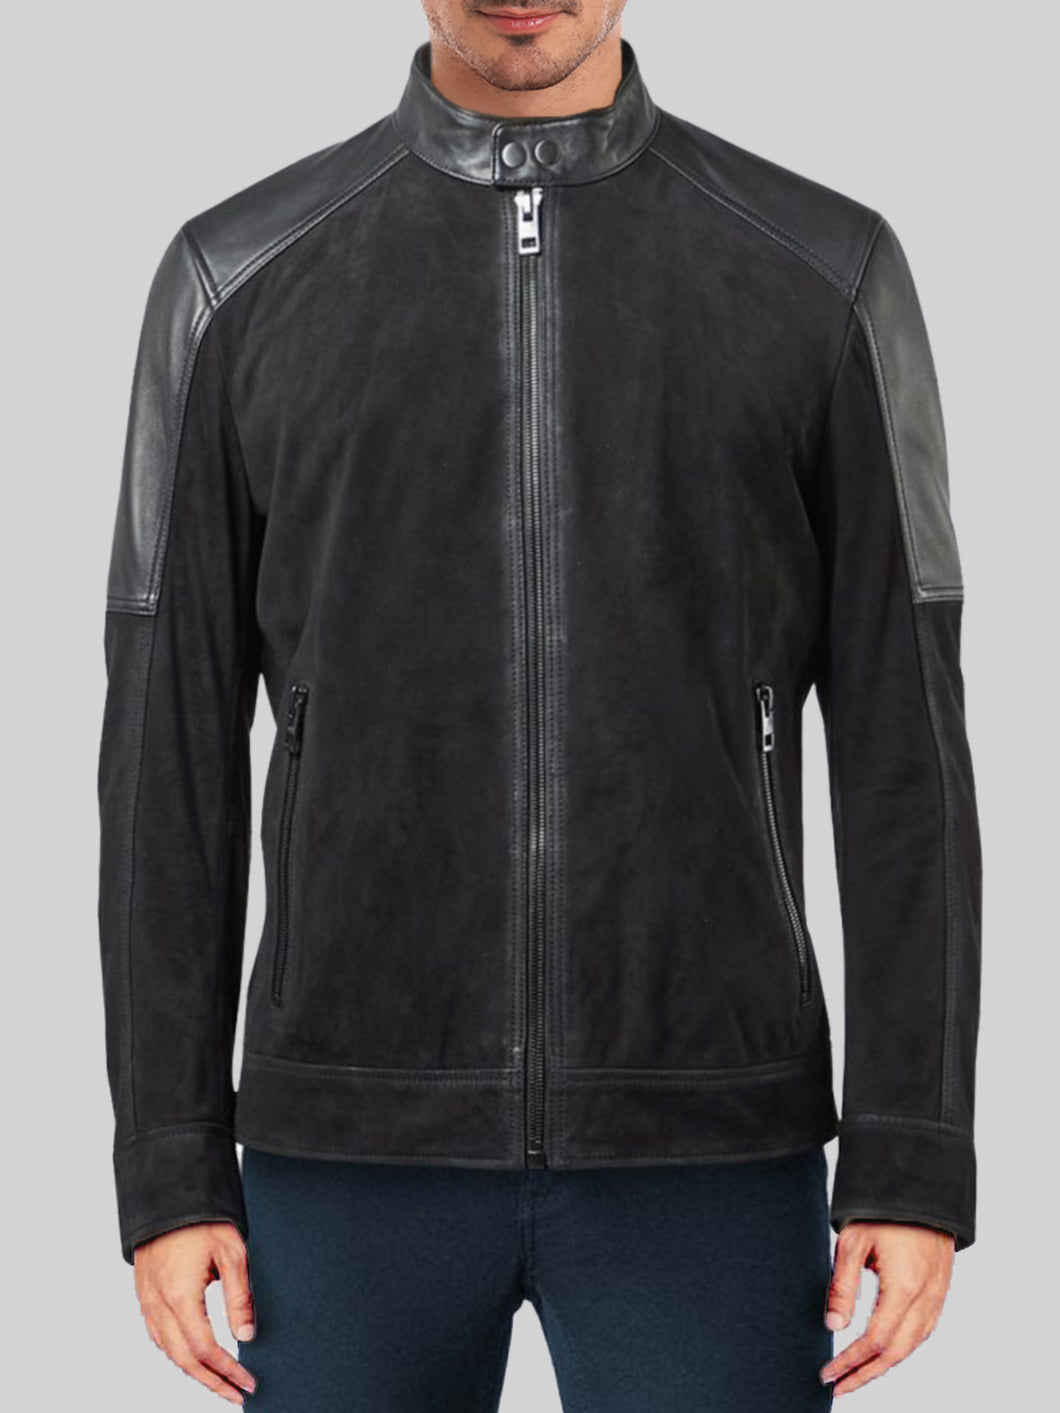 Men's Snap Tab Black Leather Jacket